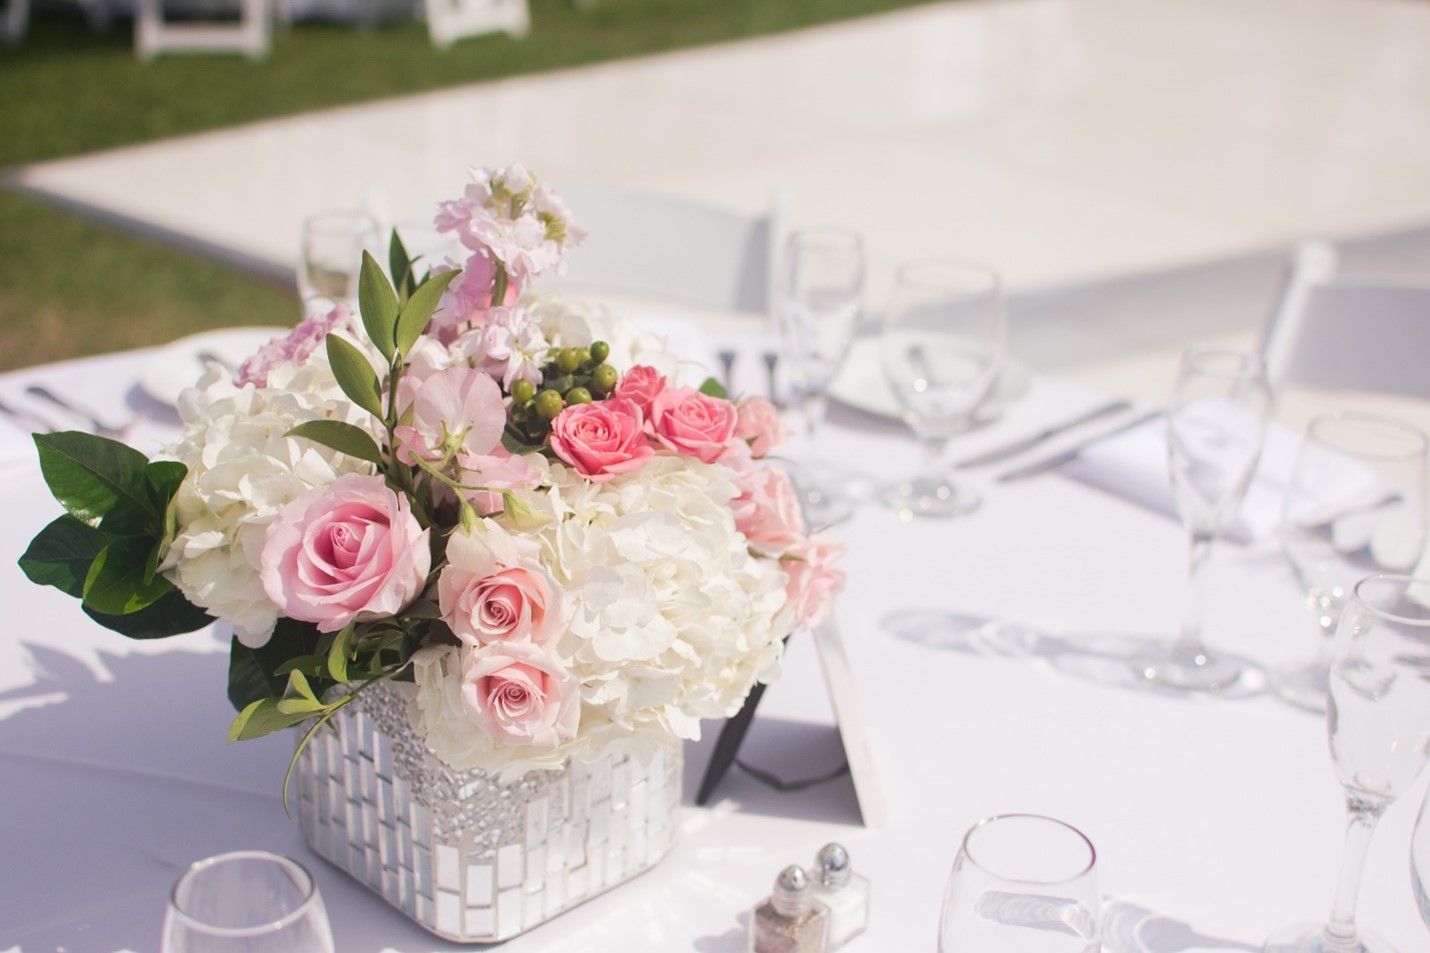 6 Genius & Easy Ways To Reuse Your Wedding Flowers
